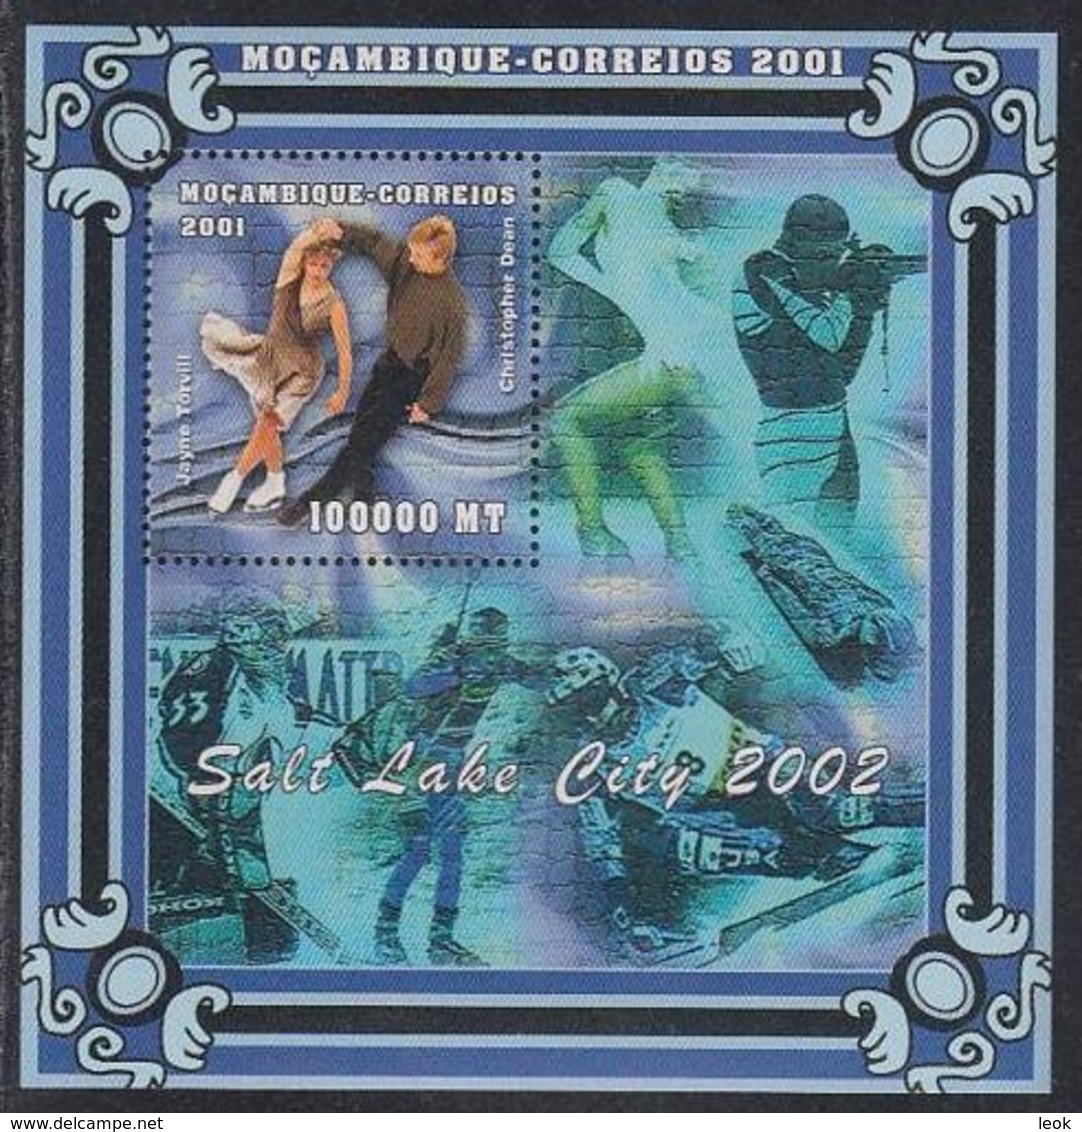 Salt Lake City 2002 Olympic Games Christopher Dean Mozambique MNH S/S Stamp 2001 - Inverno2002: Salt Lake City